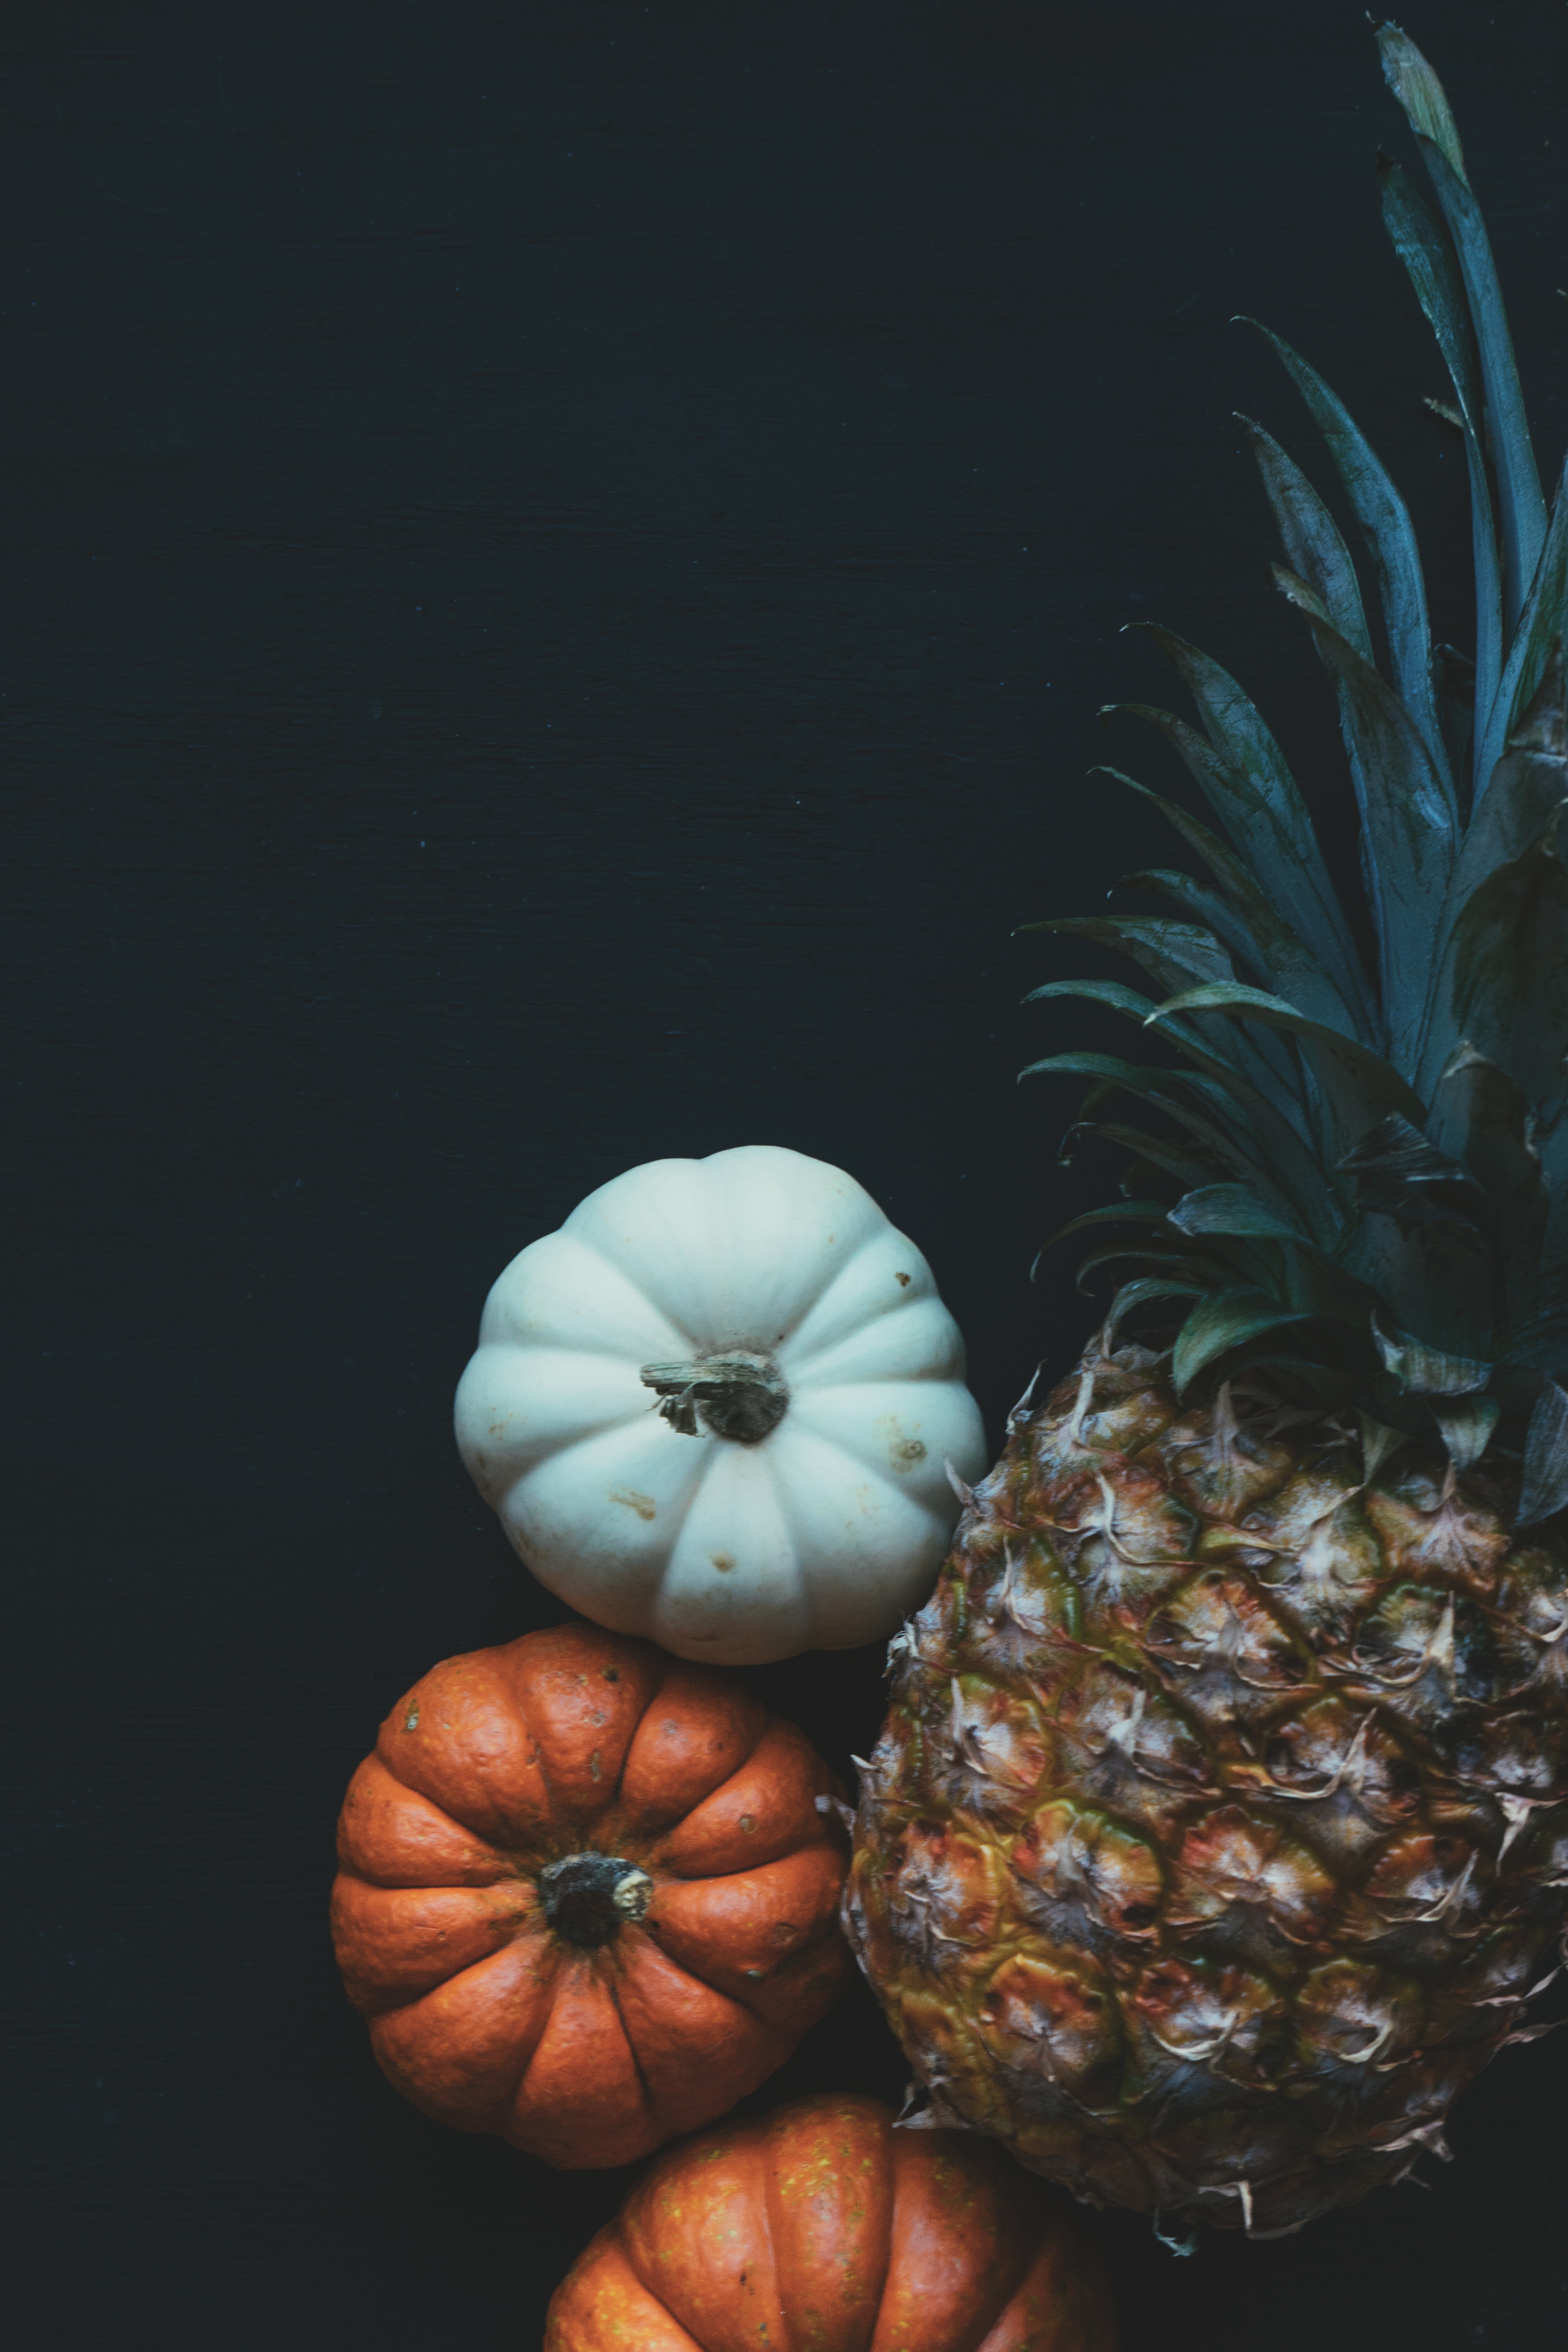 Pineapple Beside Pumpkin, Art, Black background, Color, Dark, HQ Photo